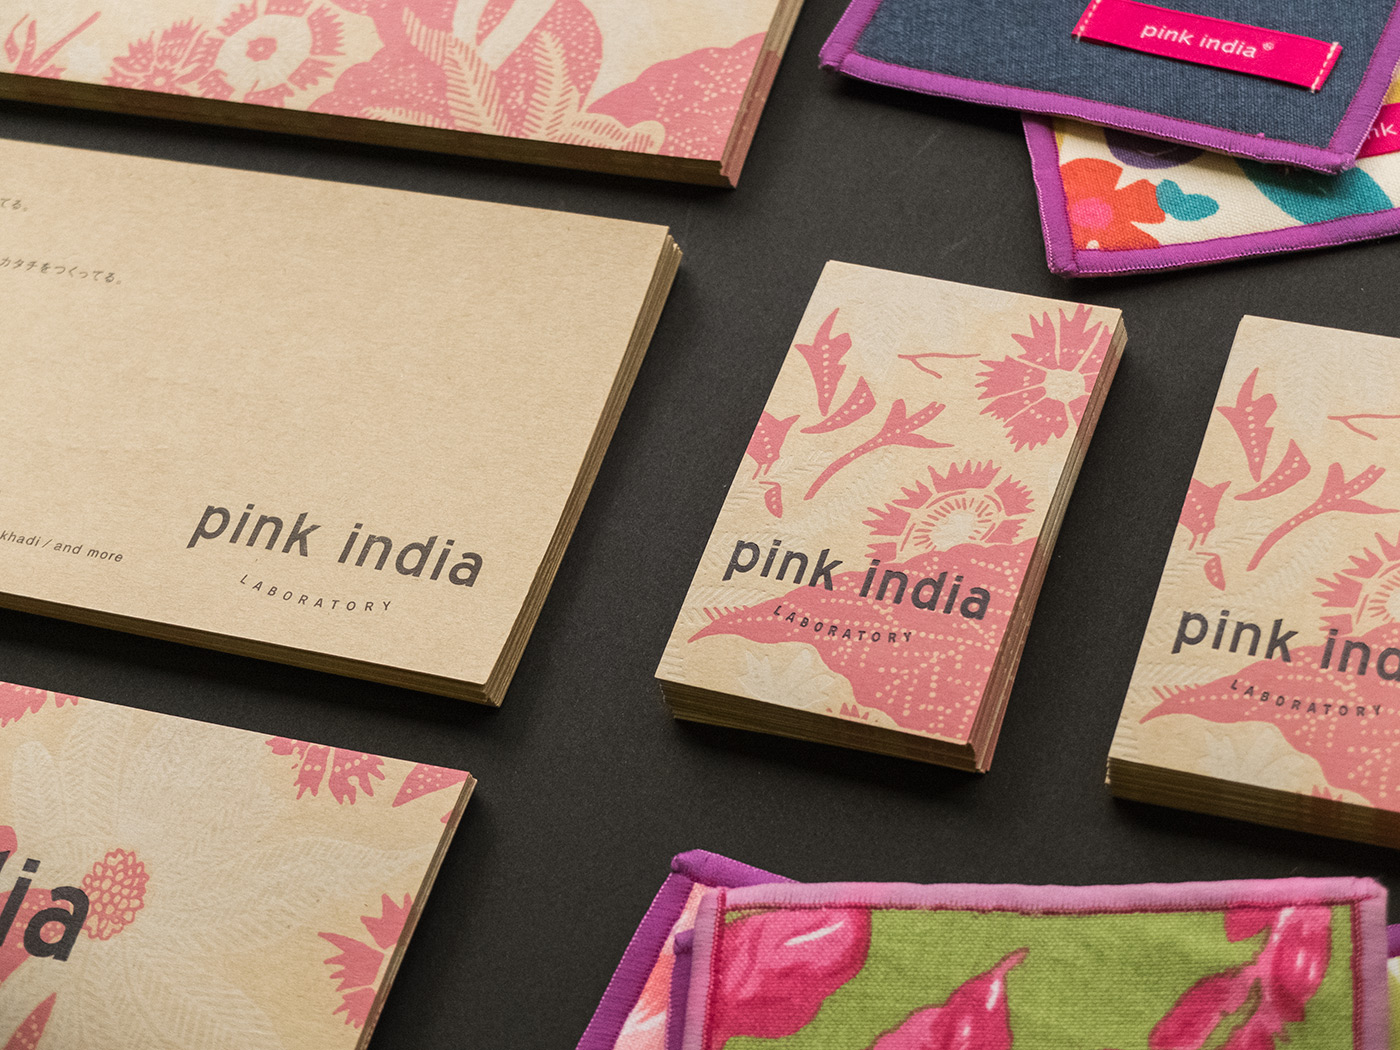 Pink Indiaの新しいロゴとクラフト紙にピンク、黒、白インクで活版印刷した名刺とショップカード